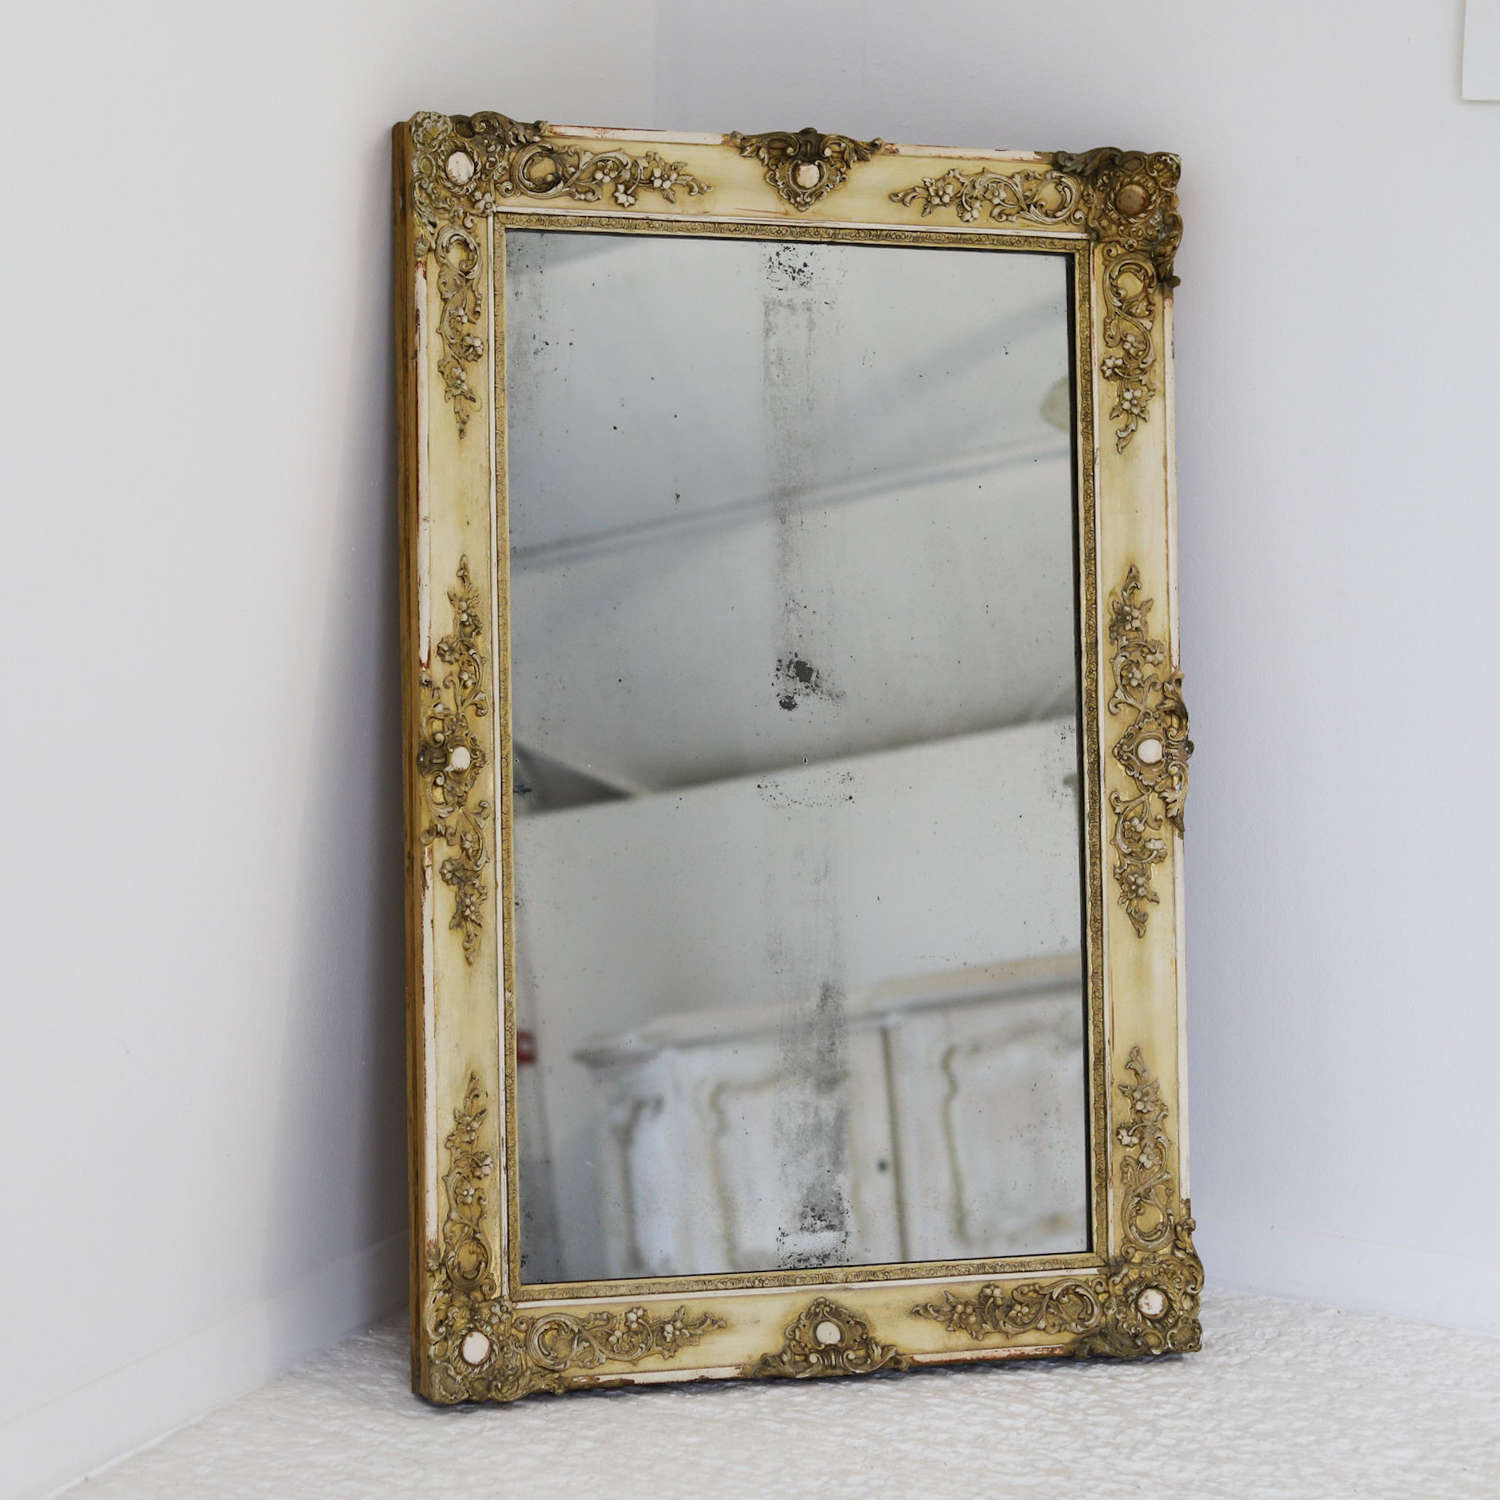 French early 19th century Restoration period rectangular mirror